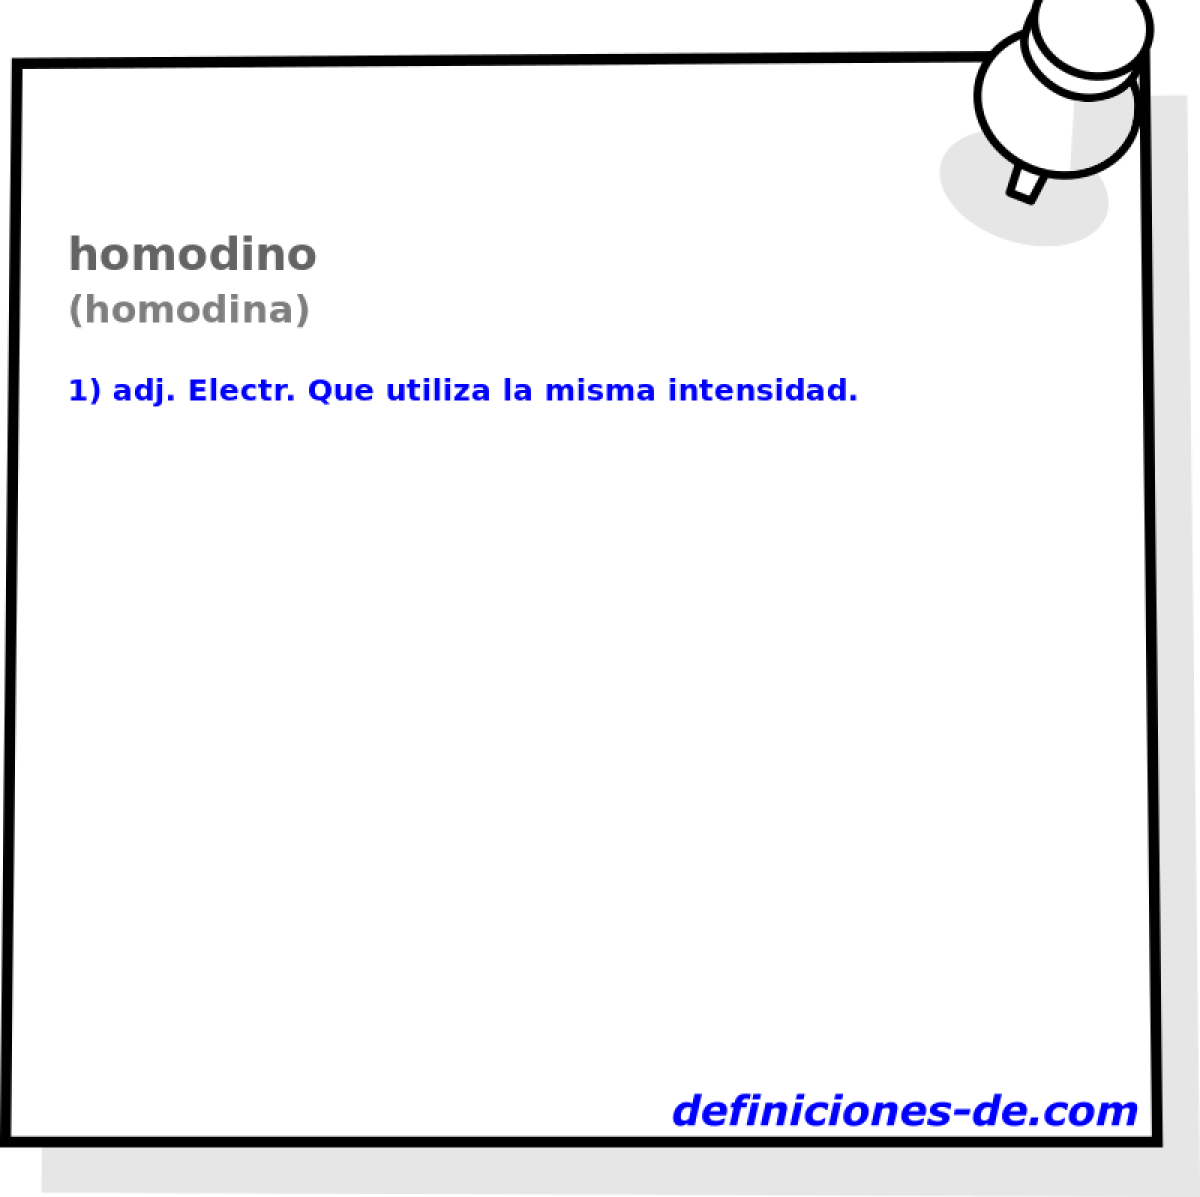 homodino (homodina)